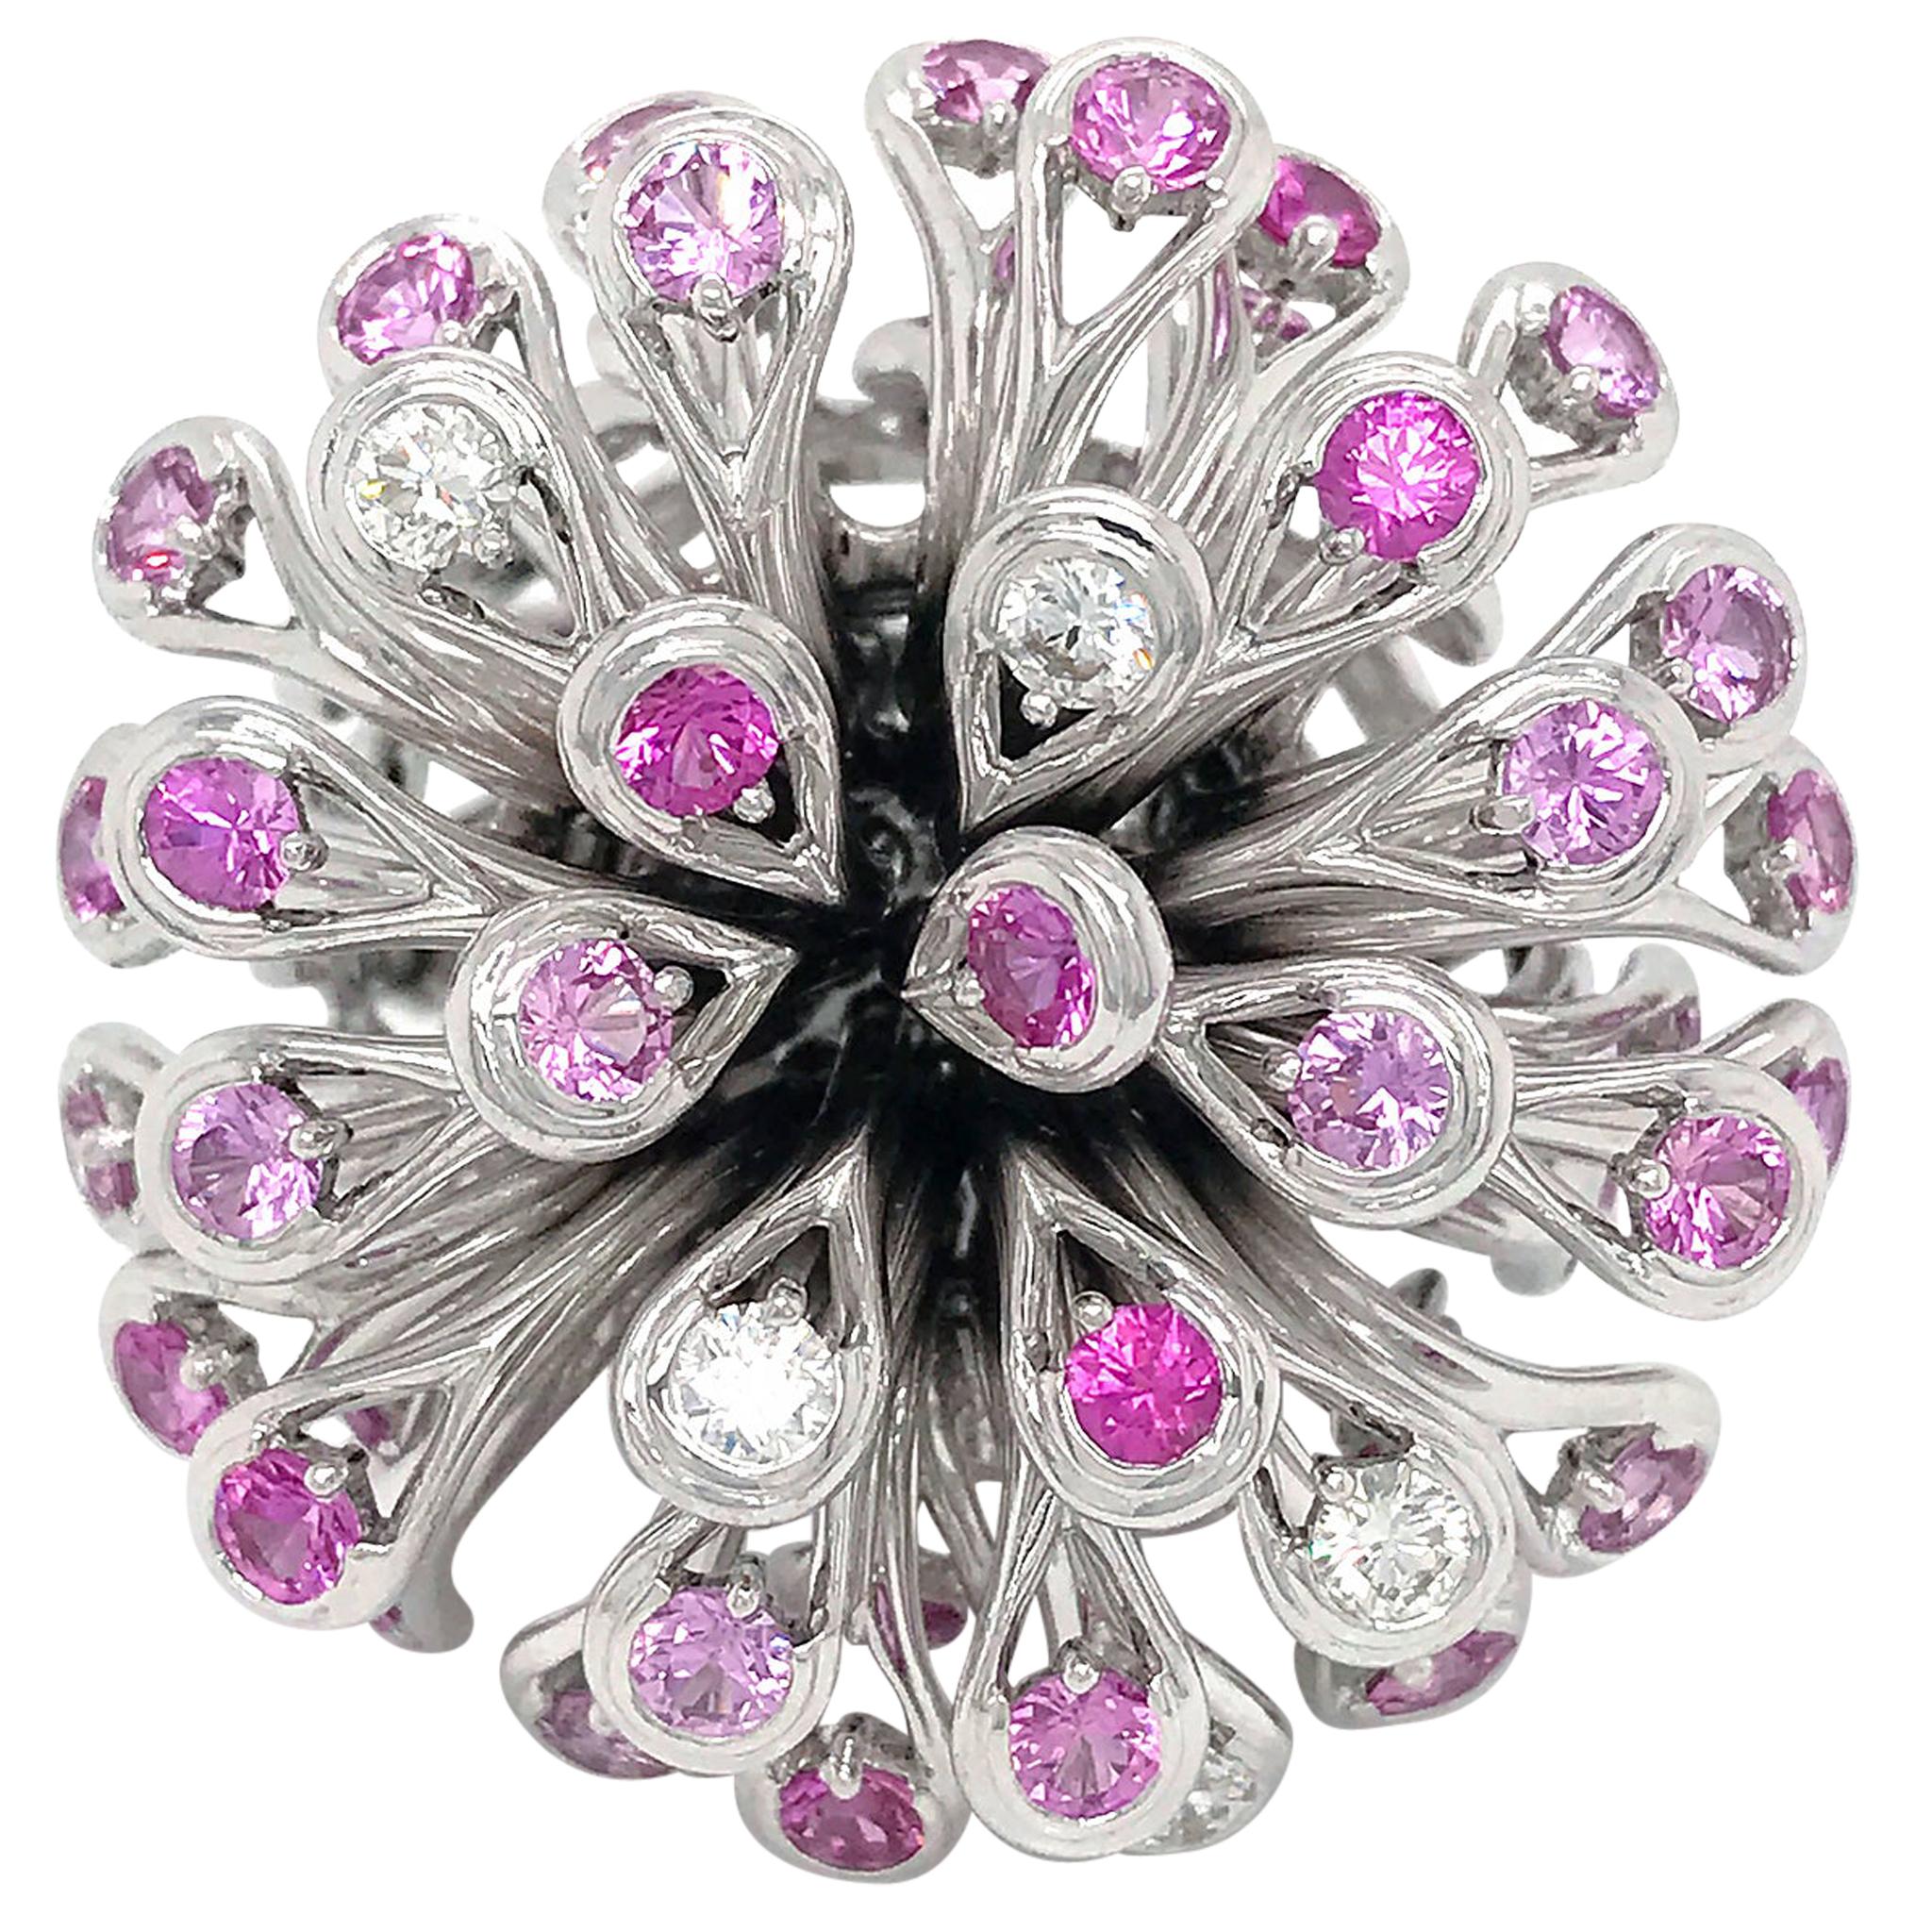 Dior White Gold Feu D'artifice 18 Karat Diamond and Pink Sapphire Cocktail Ring